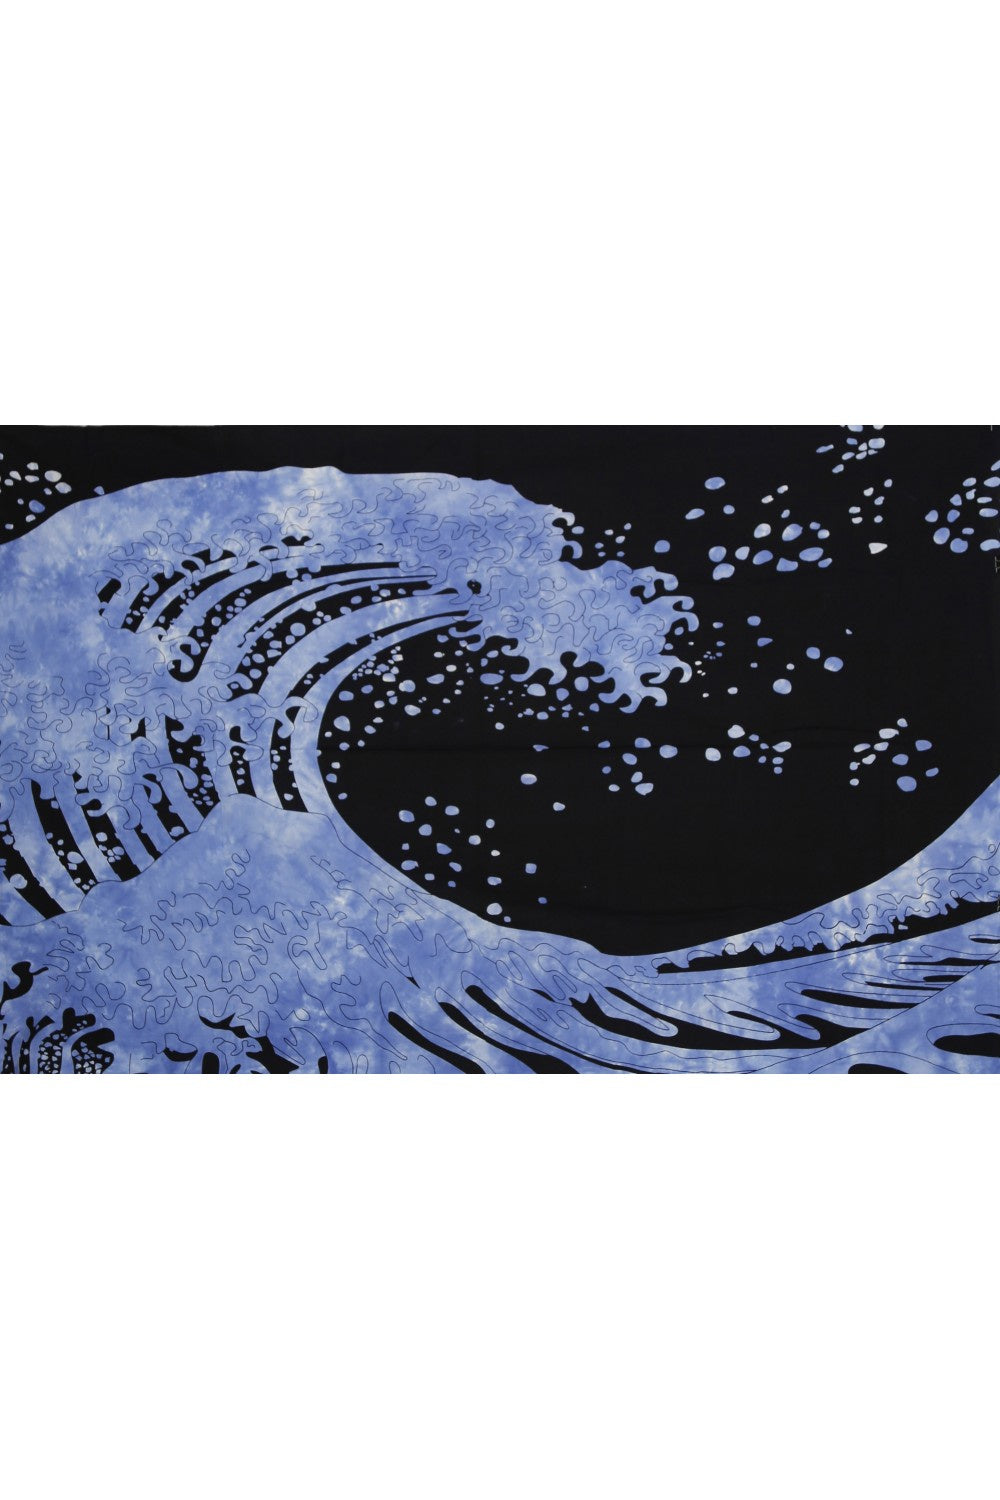 Zest For Life Ocean Wave  Blue Tie Dye Tapestry